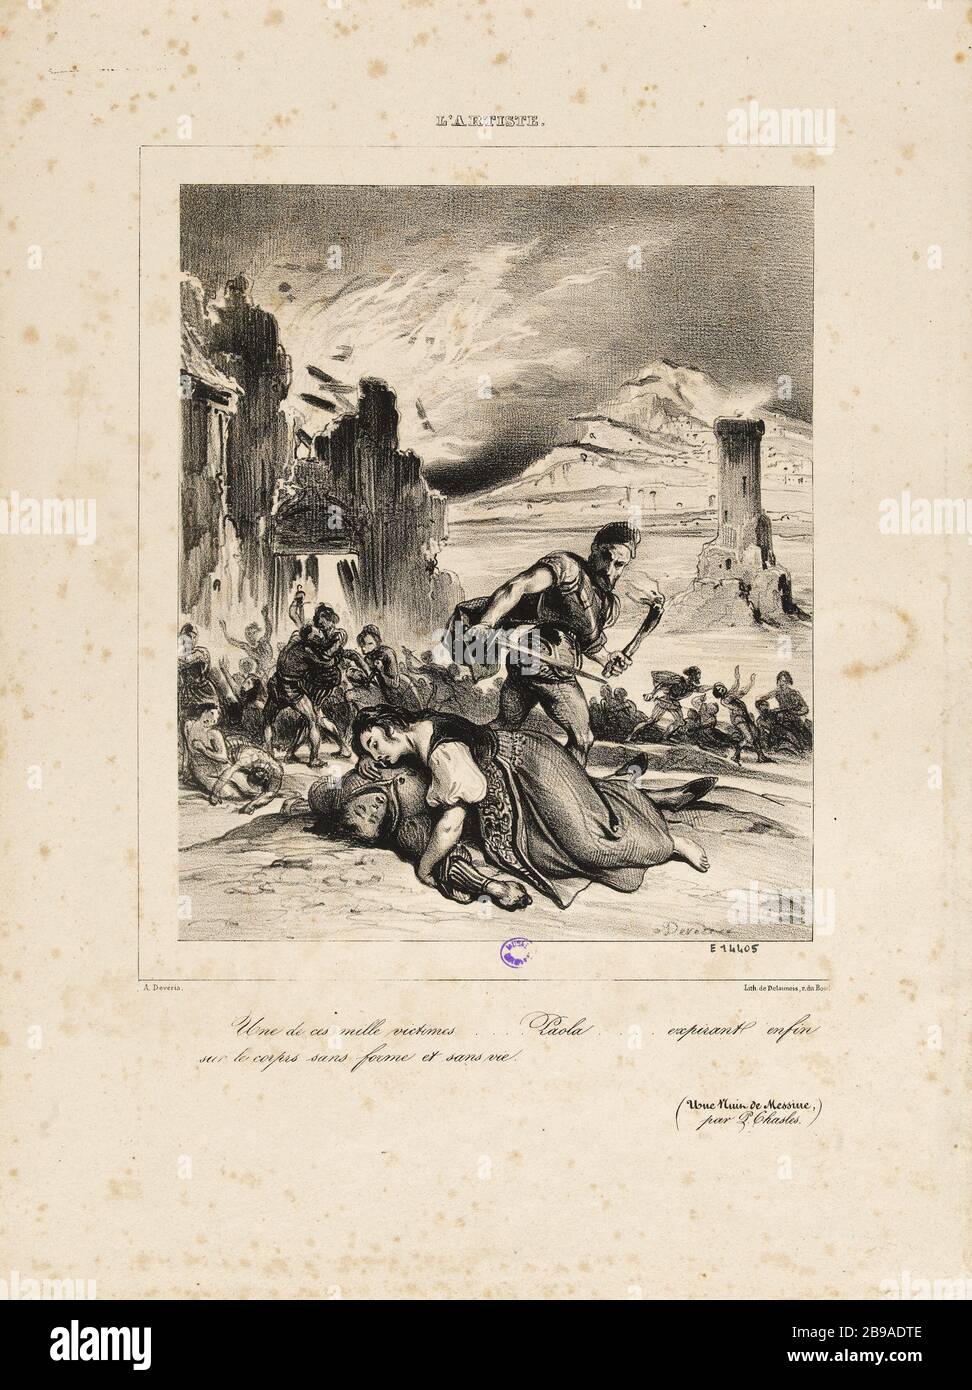 Der Künstler. Eine Nacht von Messina. Achille Devéria (1800-1857) et Delaunois. L'artiste. Une nuit de Messine. Lithographie, 1834. Paris, musée Carnavalet. Stockfoto